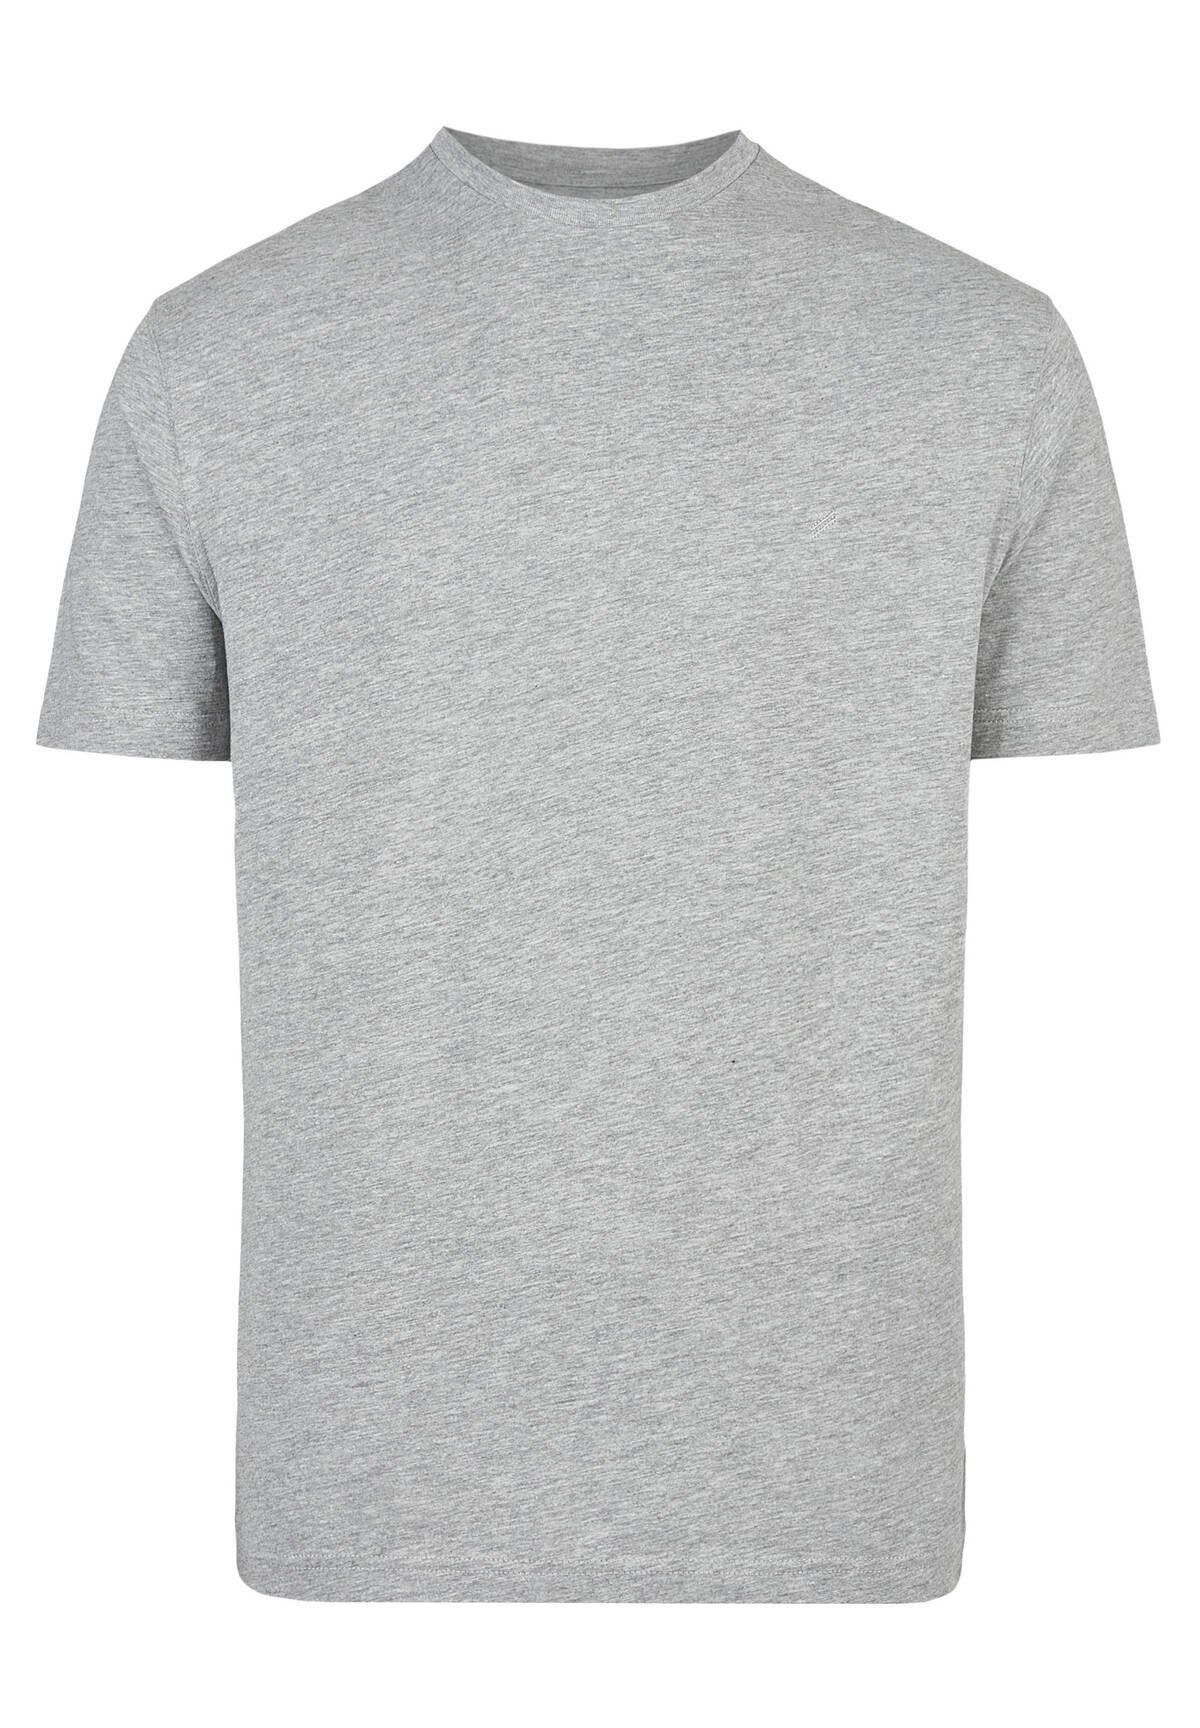 Rundhals-Ausschnitt, Unifarben Daniel mit Pack T-Shirts Hechter Shirt T-Shirt 2 im